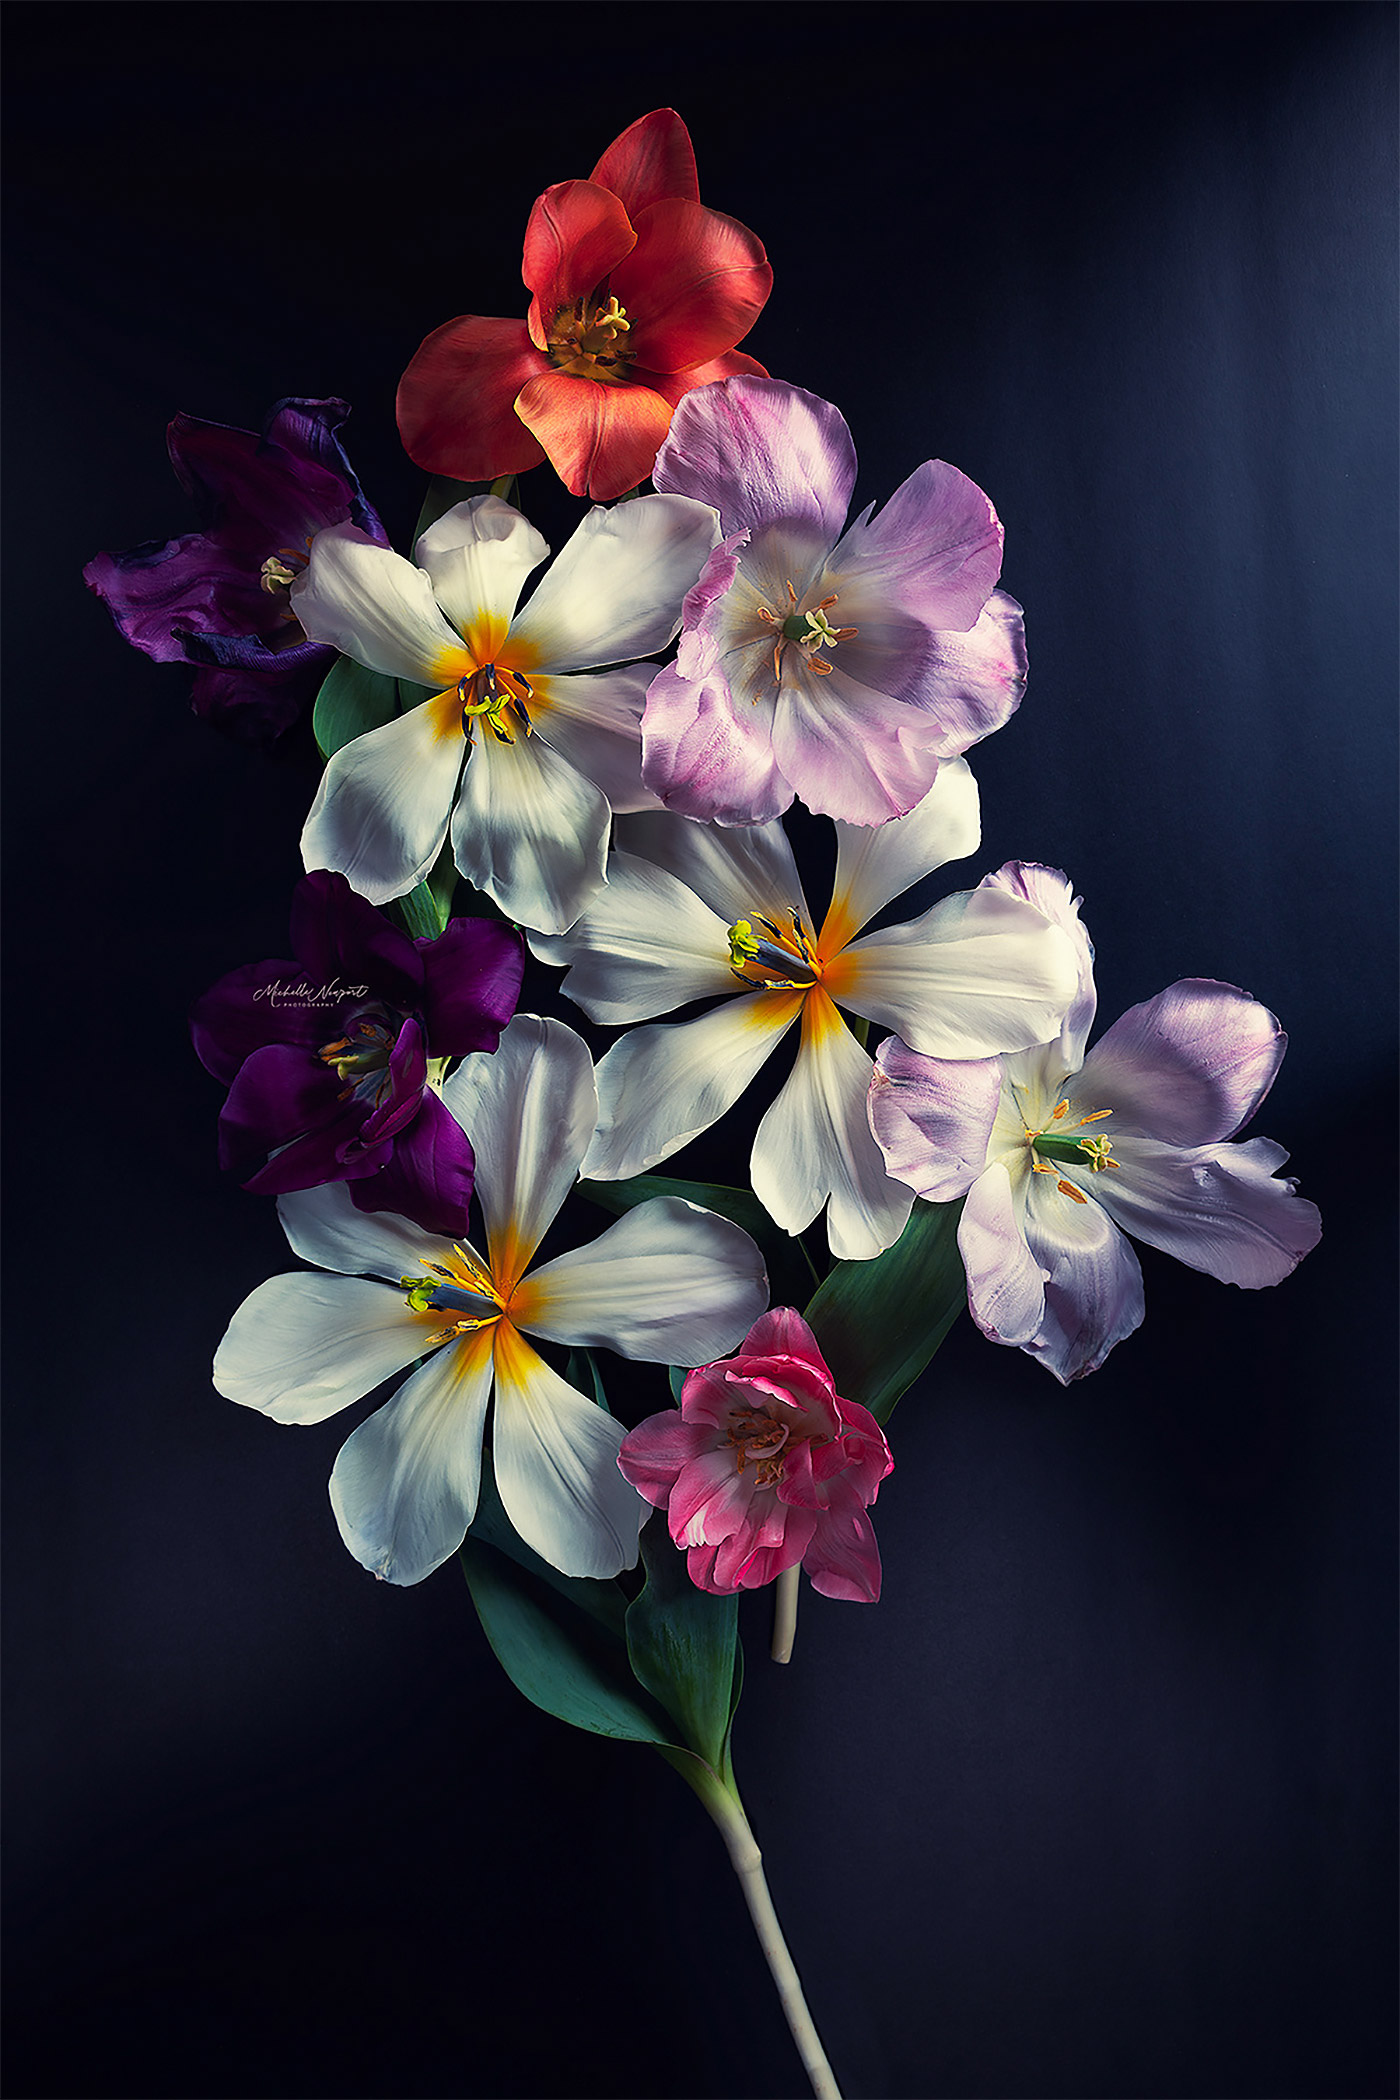 Michelle Newport精彩的花卉摄影作品